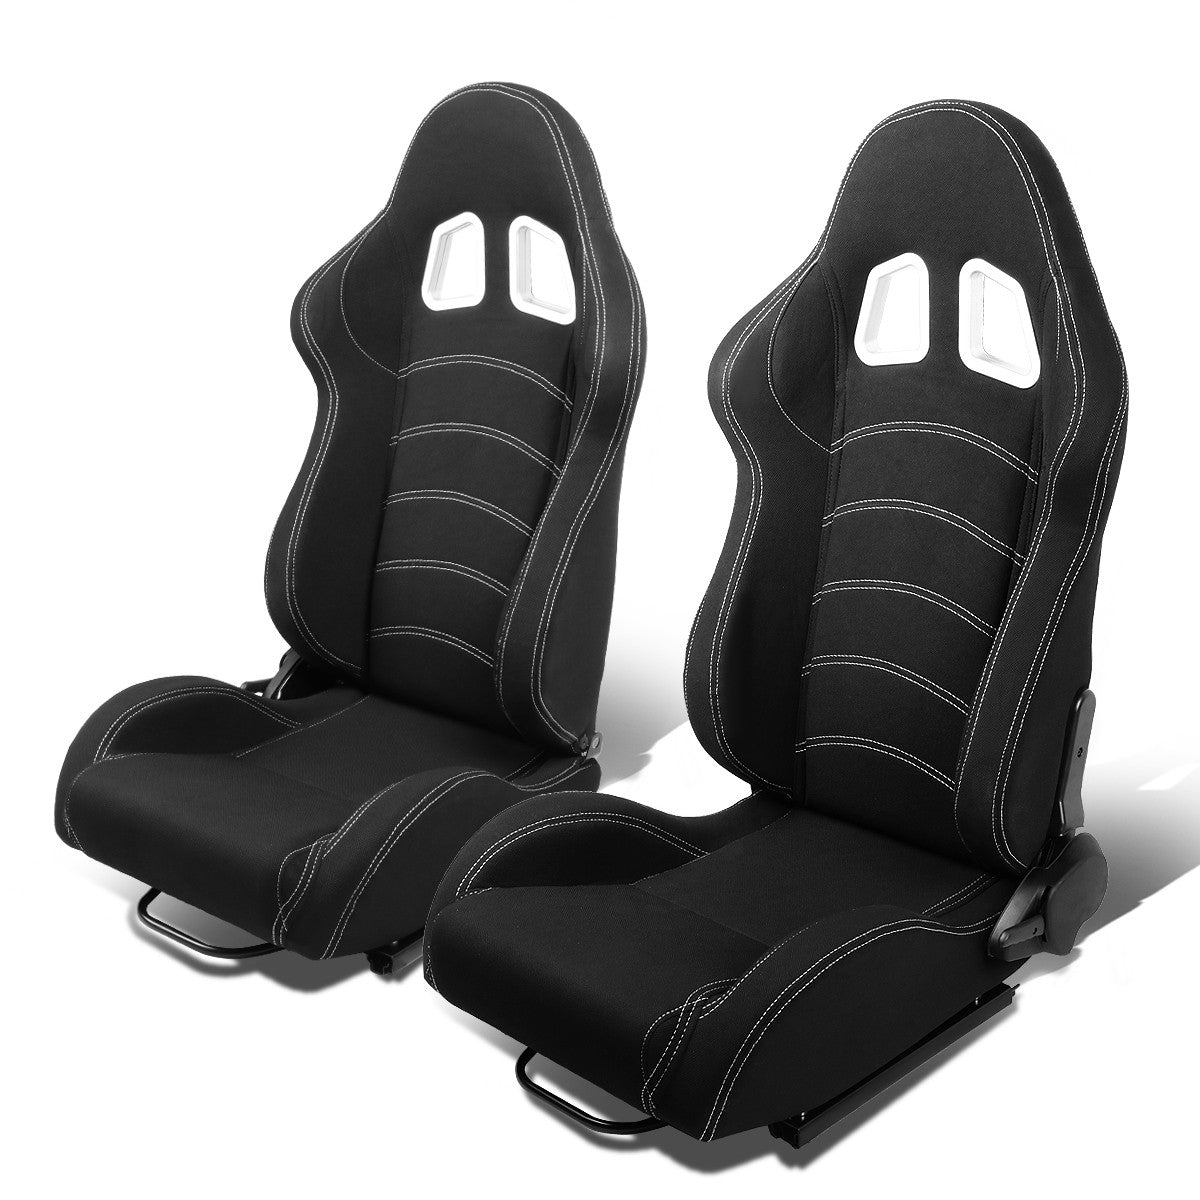 Racing Seats - Reclinable - Woven Fabric - Pair